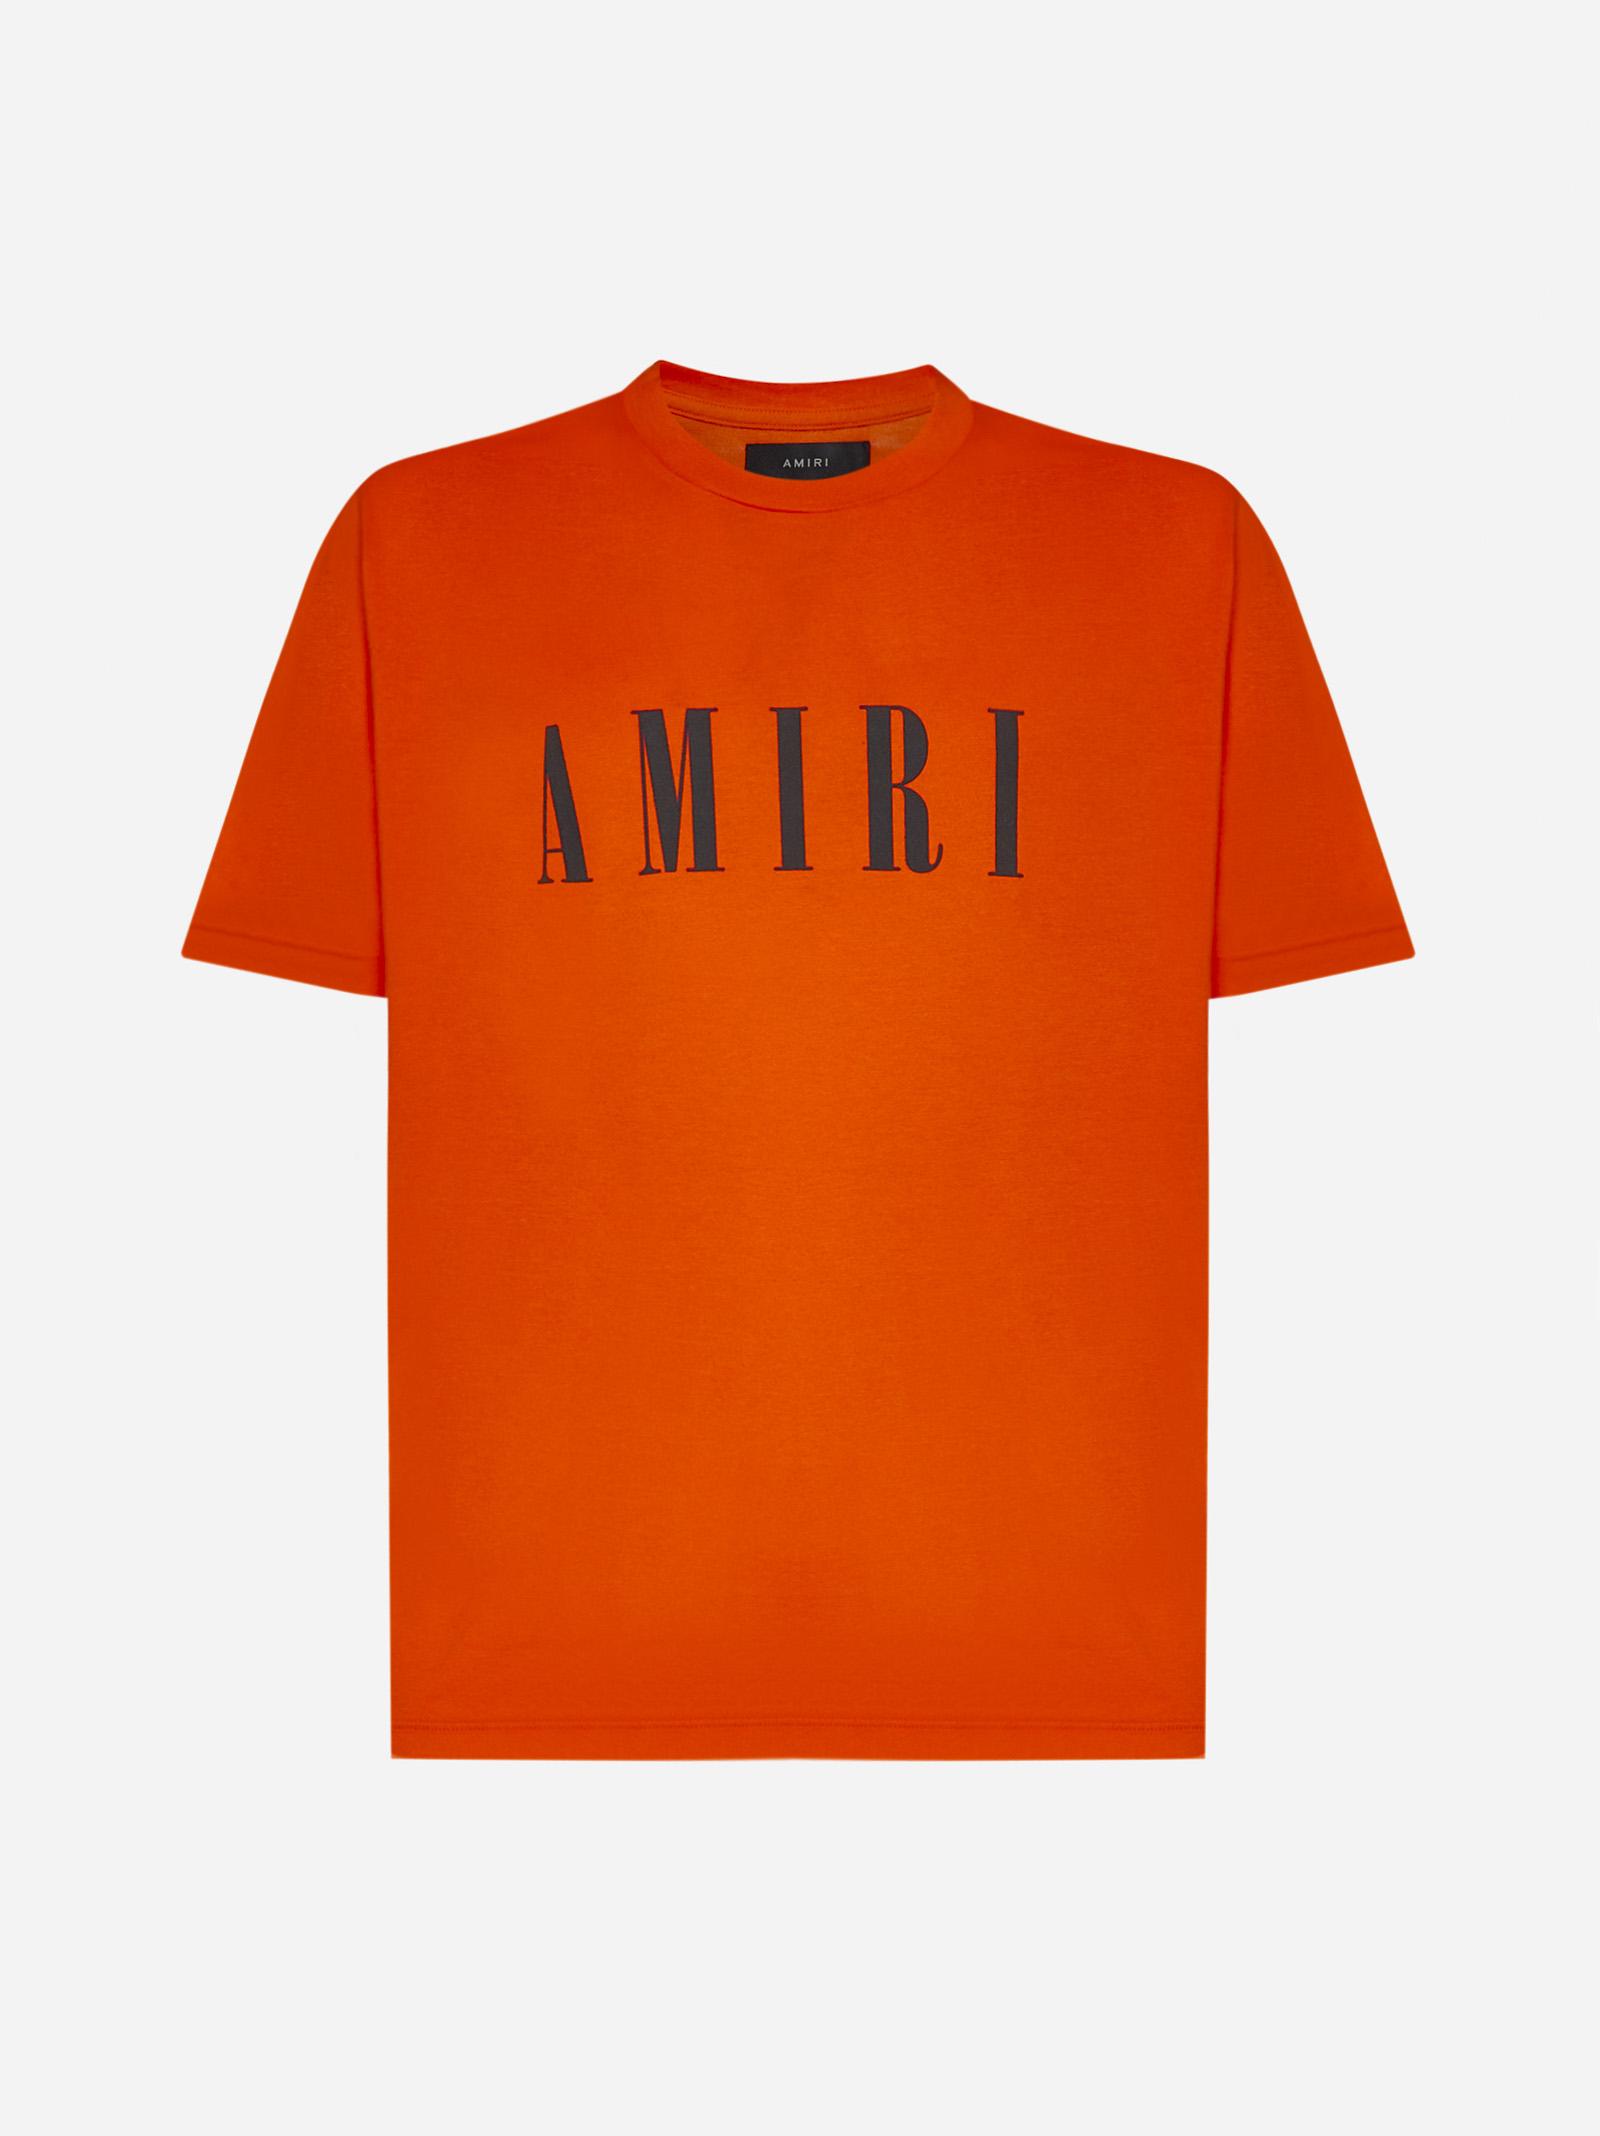 Amiri T-shirt in Orange for Men | Lyst UK